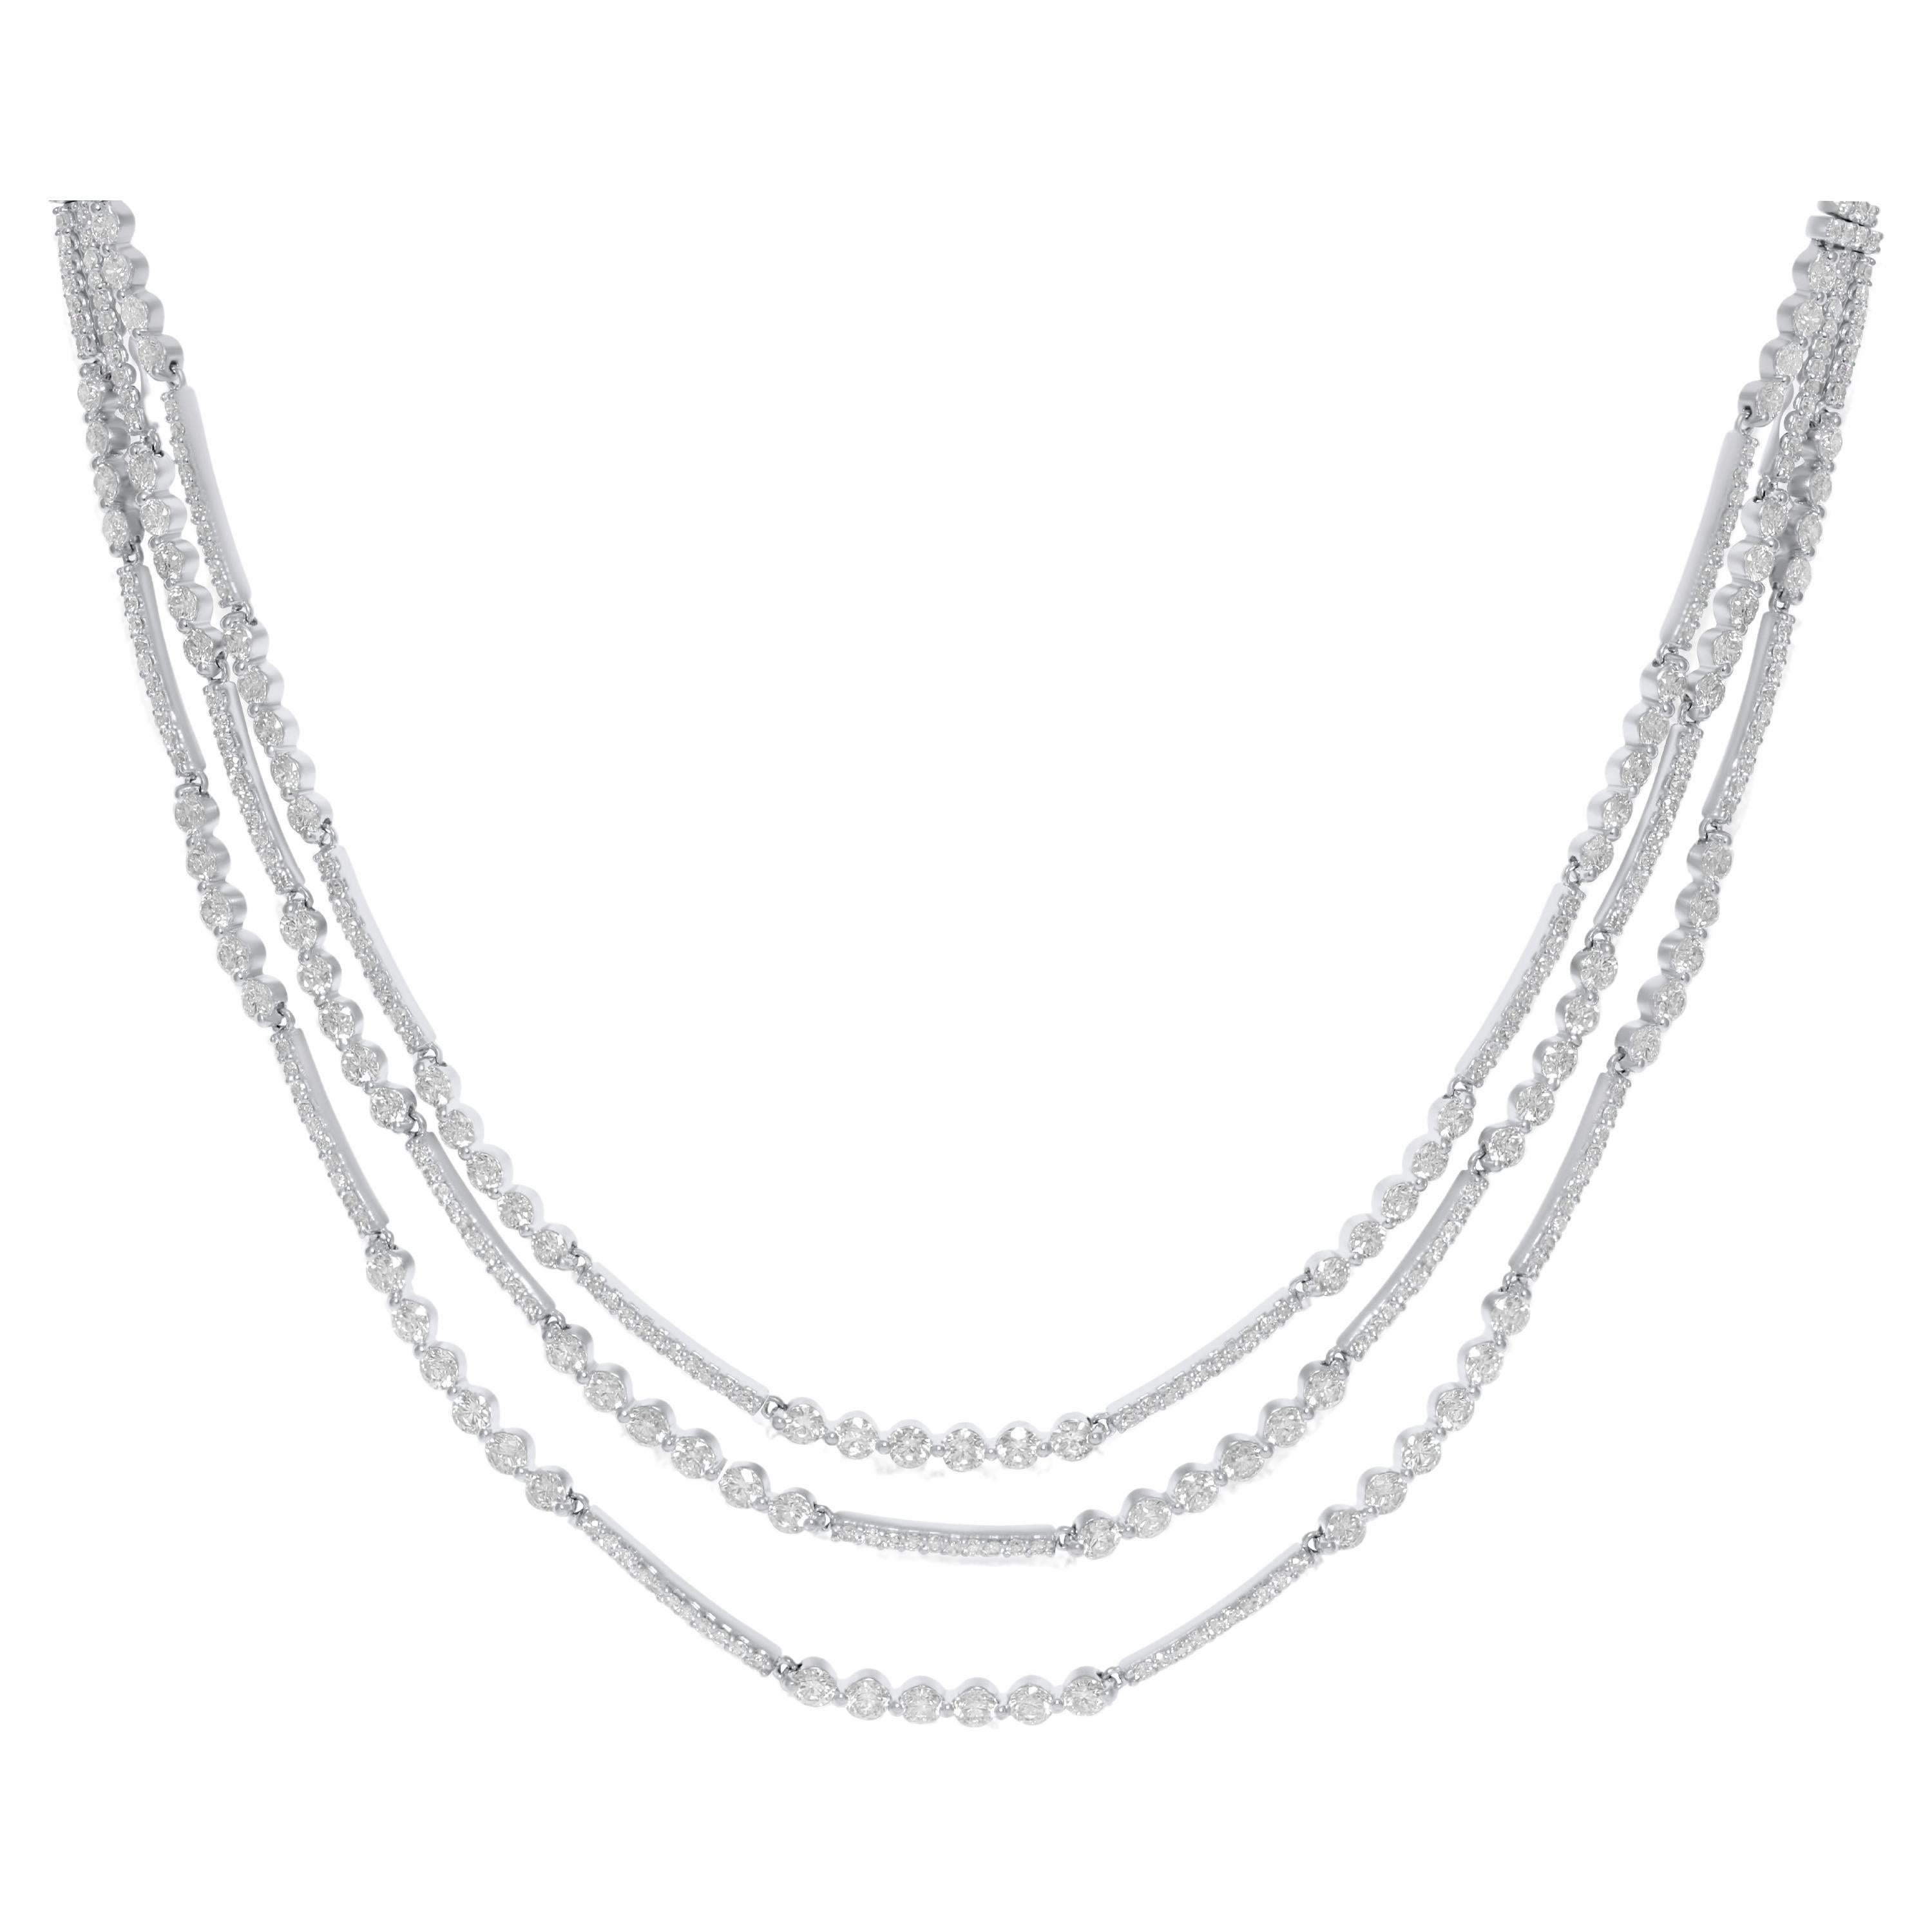 Diana M. 9.75 Carat Diamond Layered Necklace For Sale